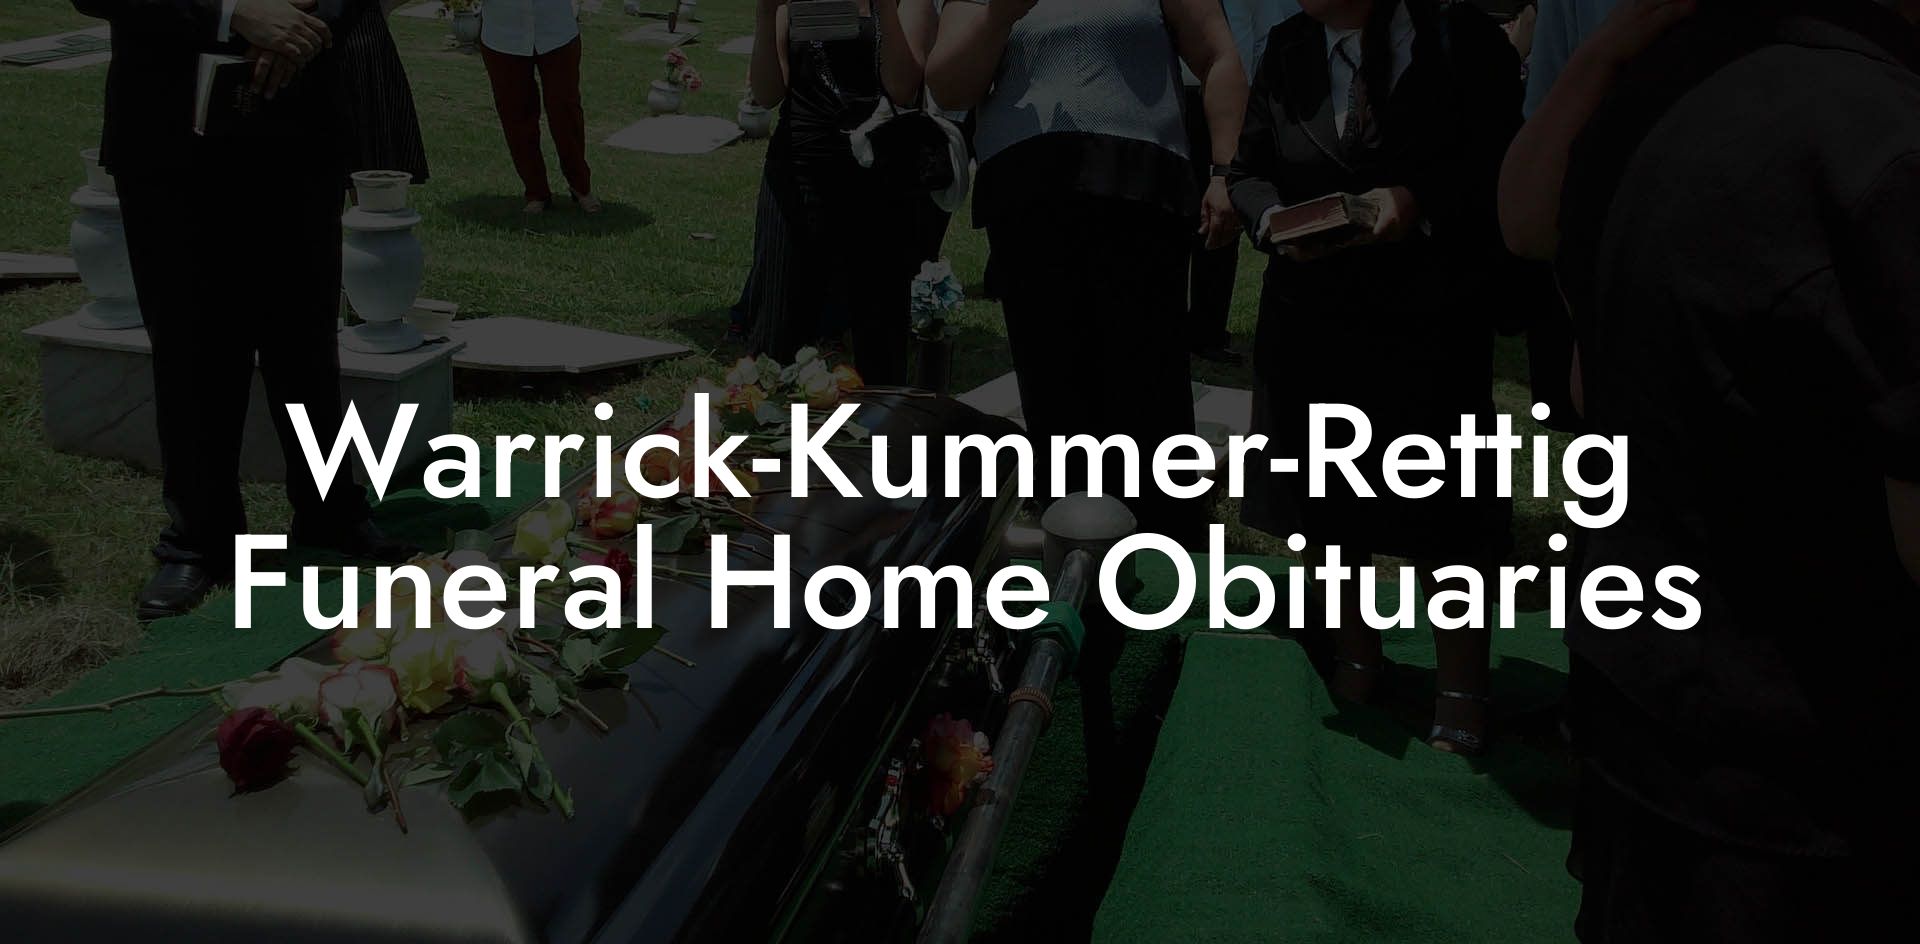 Warrick-Kummer-Rettig Funeral Home Obituaries